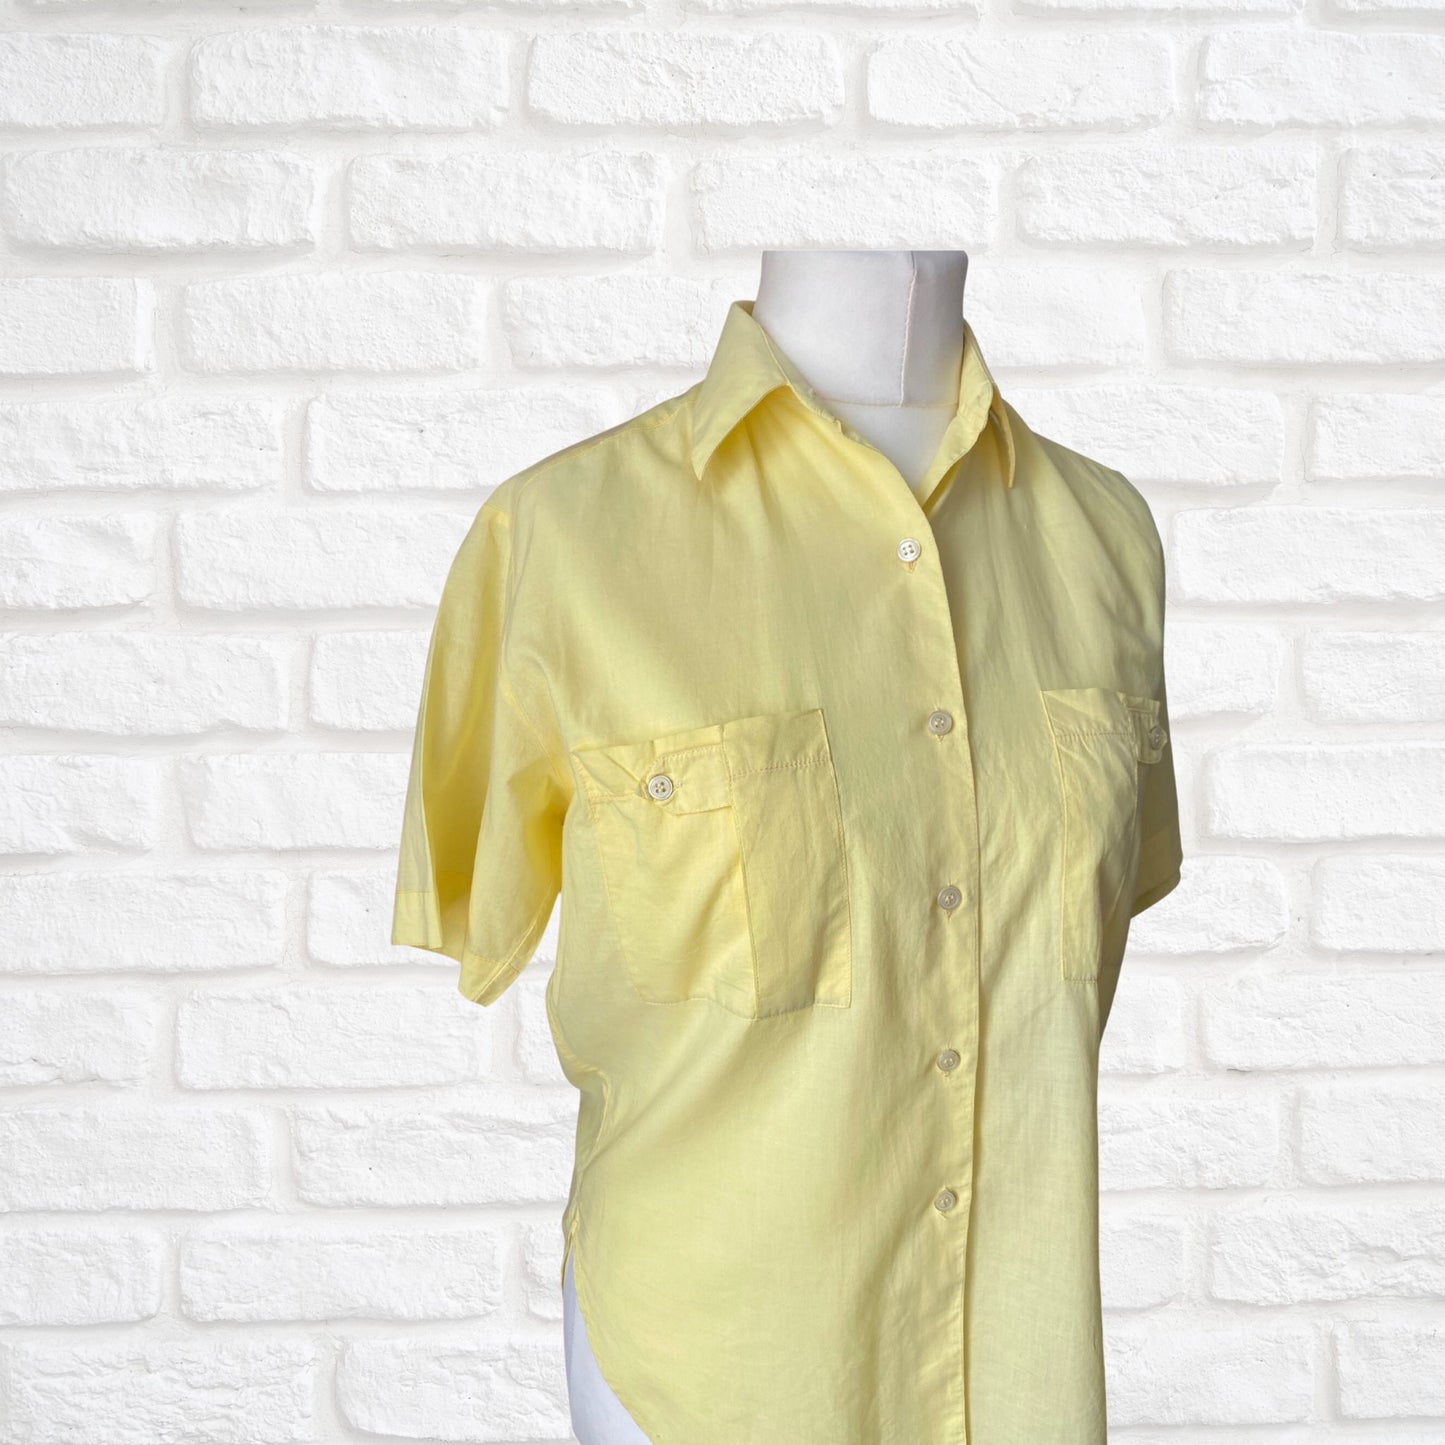 80s shirt sleeves yellow cotton shirt . Approx U.K. size  12-14